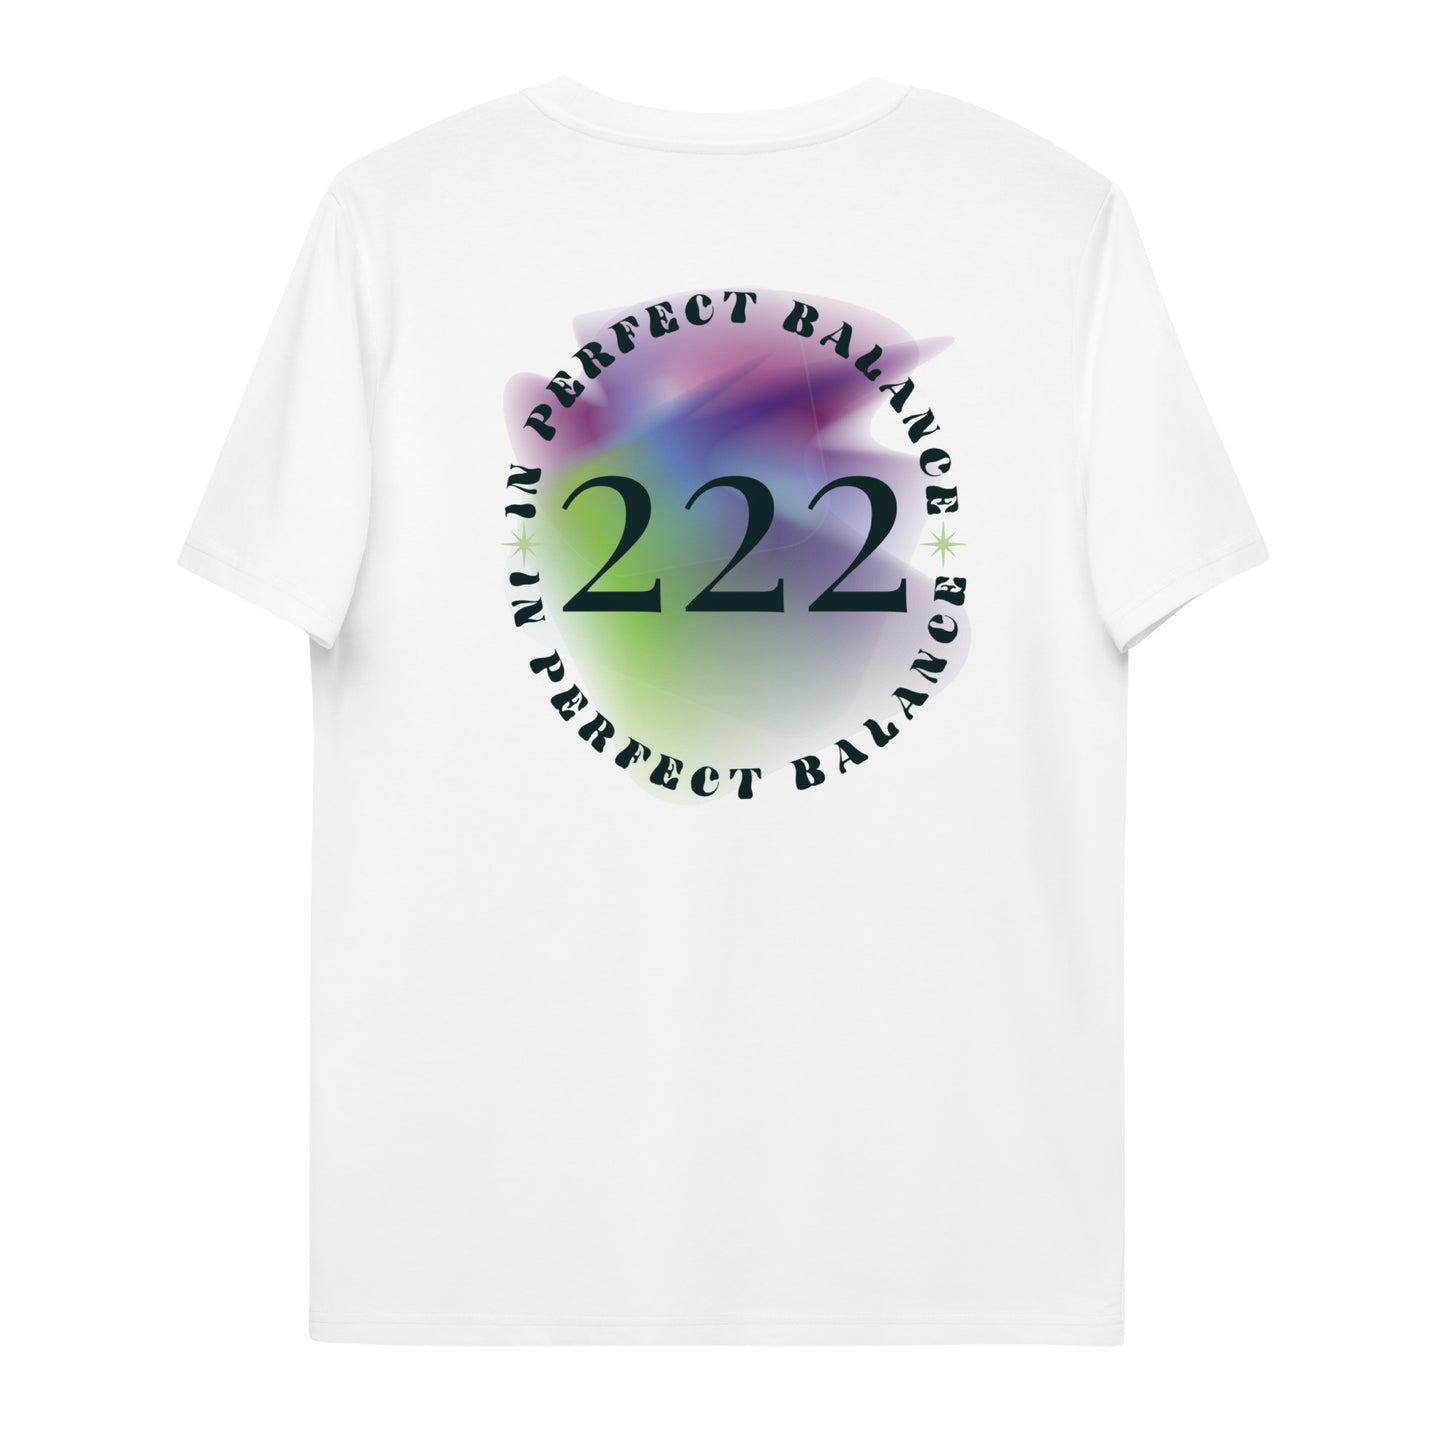 222 Lucky Number Unisex organic cotton spiritual t-shirt